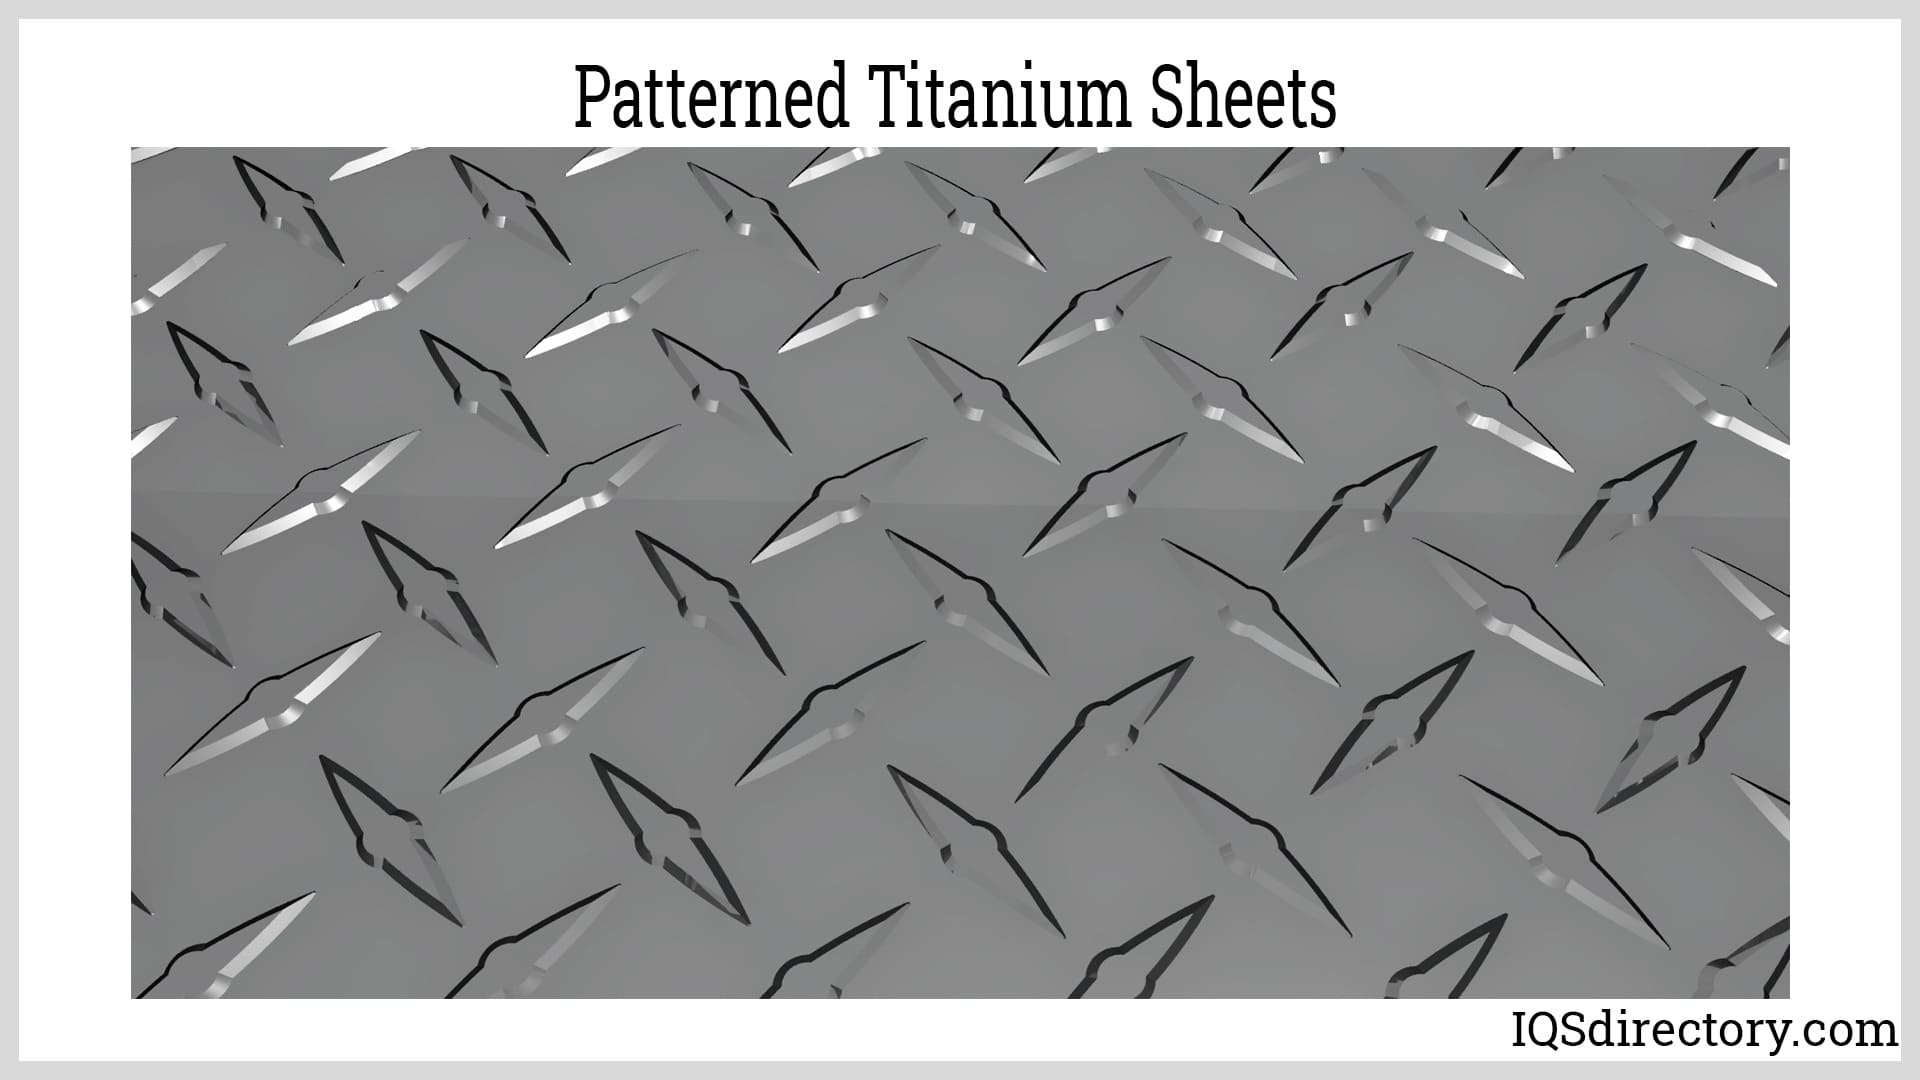 Patterned Titanium Sheets